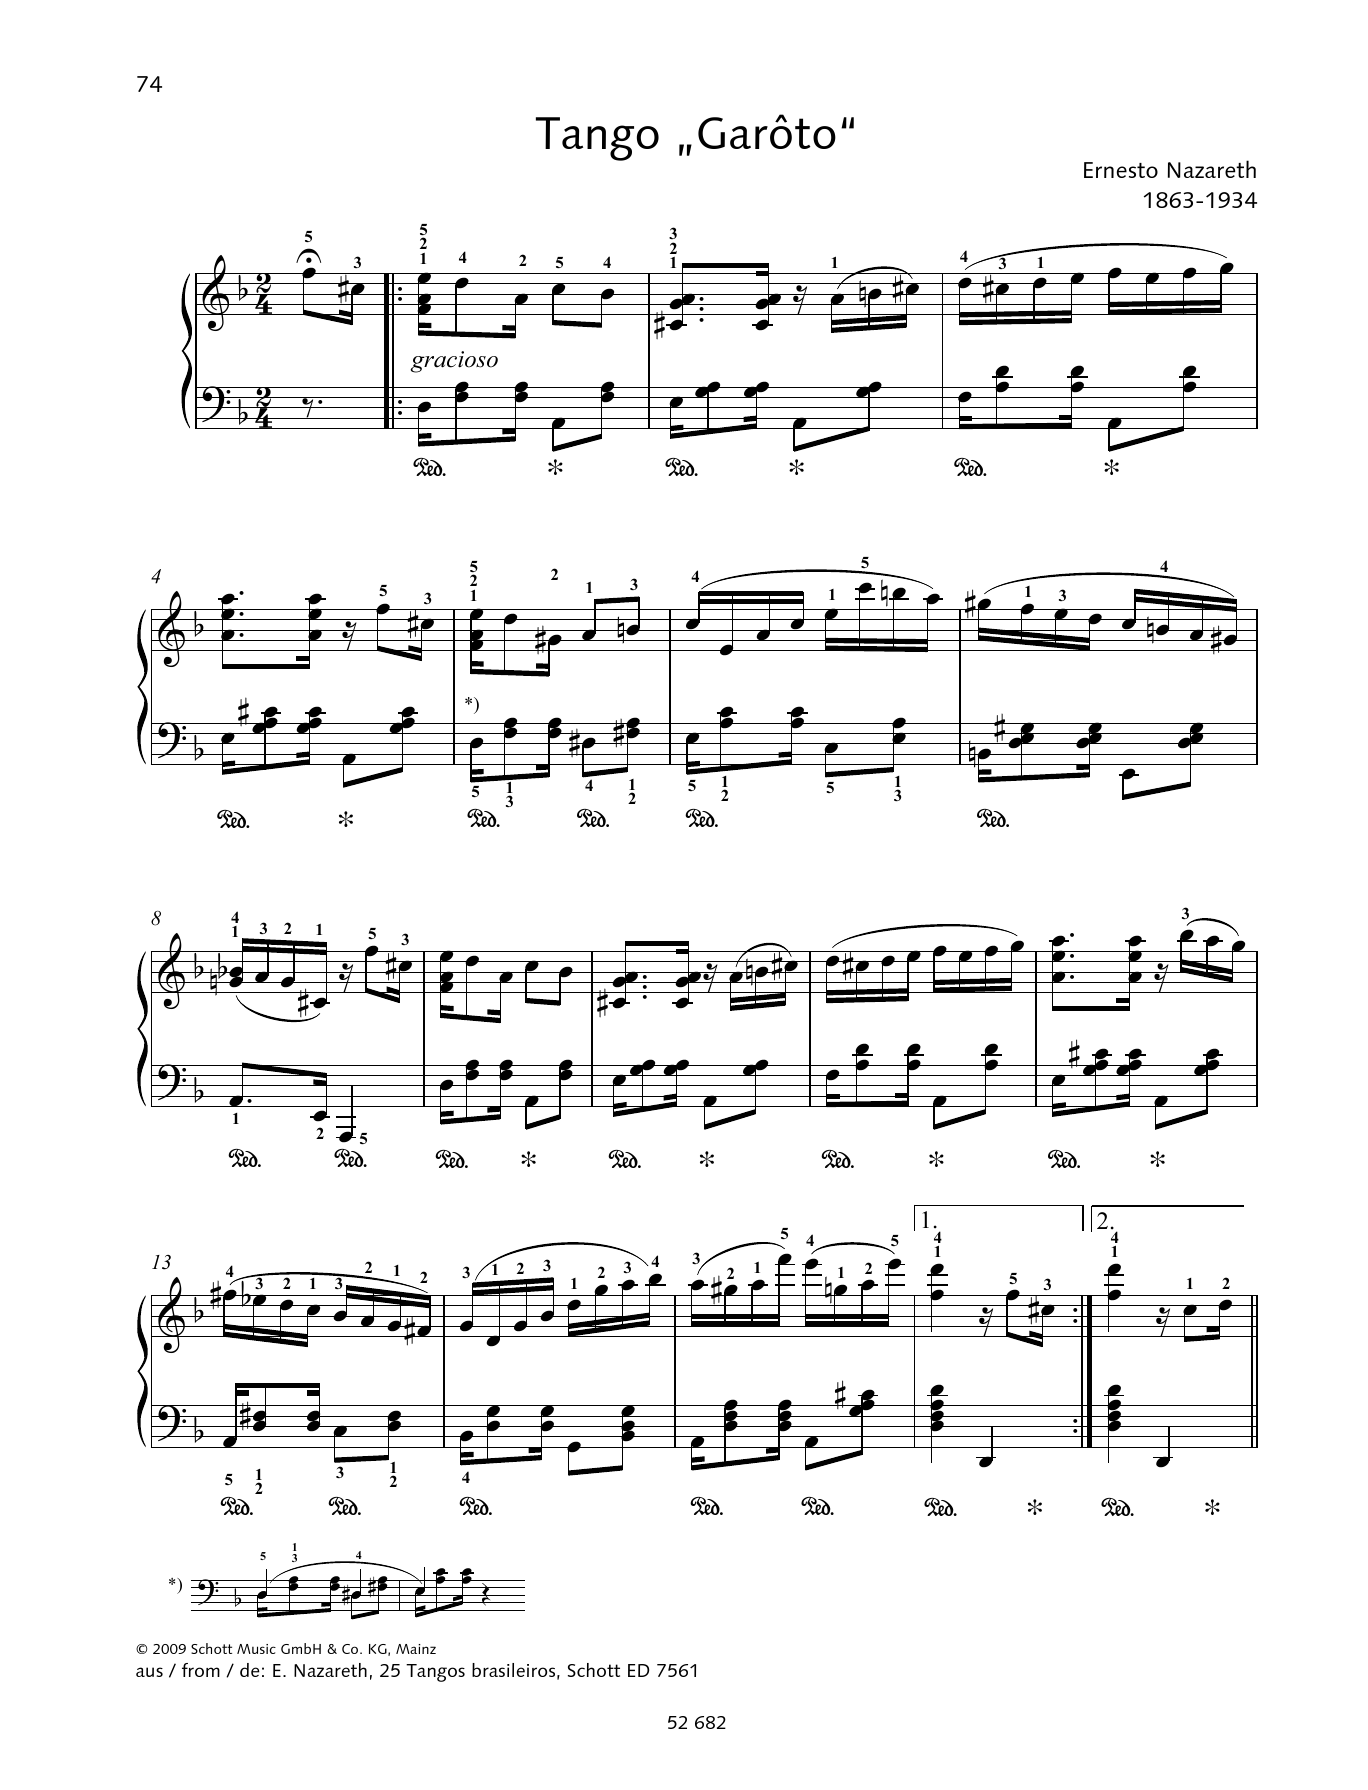 Ernesto Nazareth Tango Garôto Sheet Music Notes & Chords for Piano Solo - Download or Print PDF